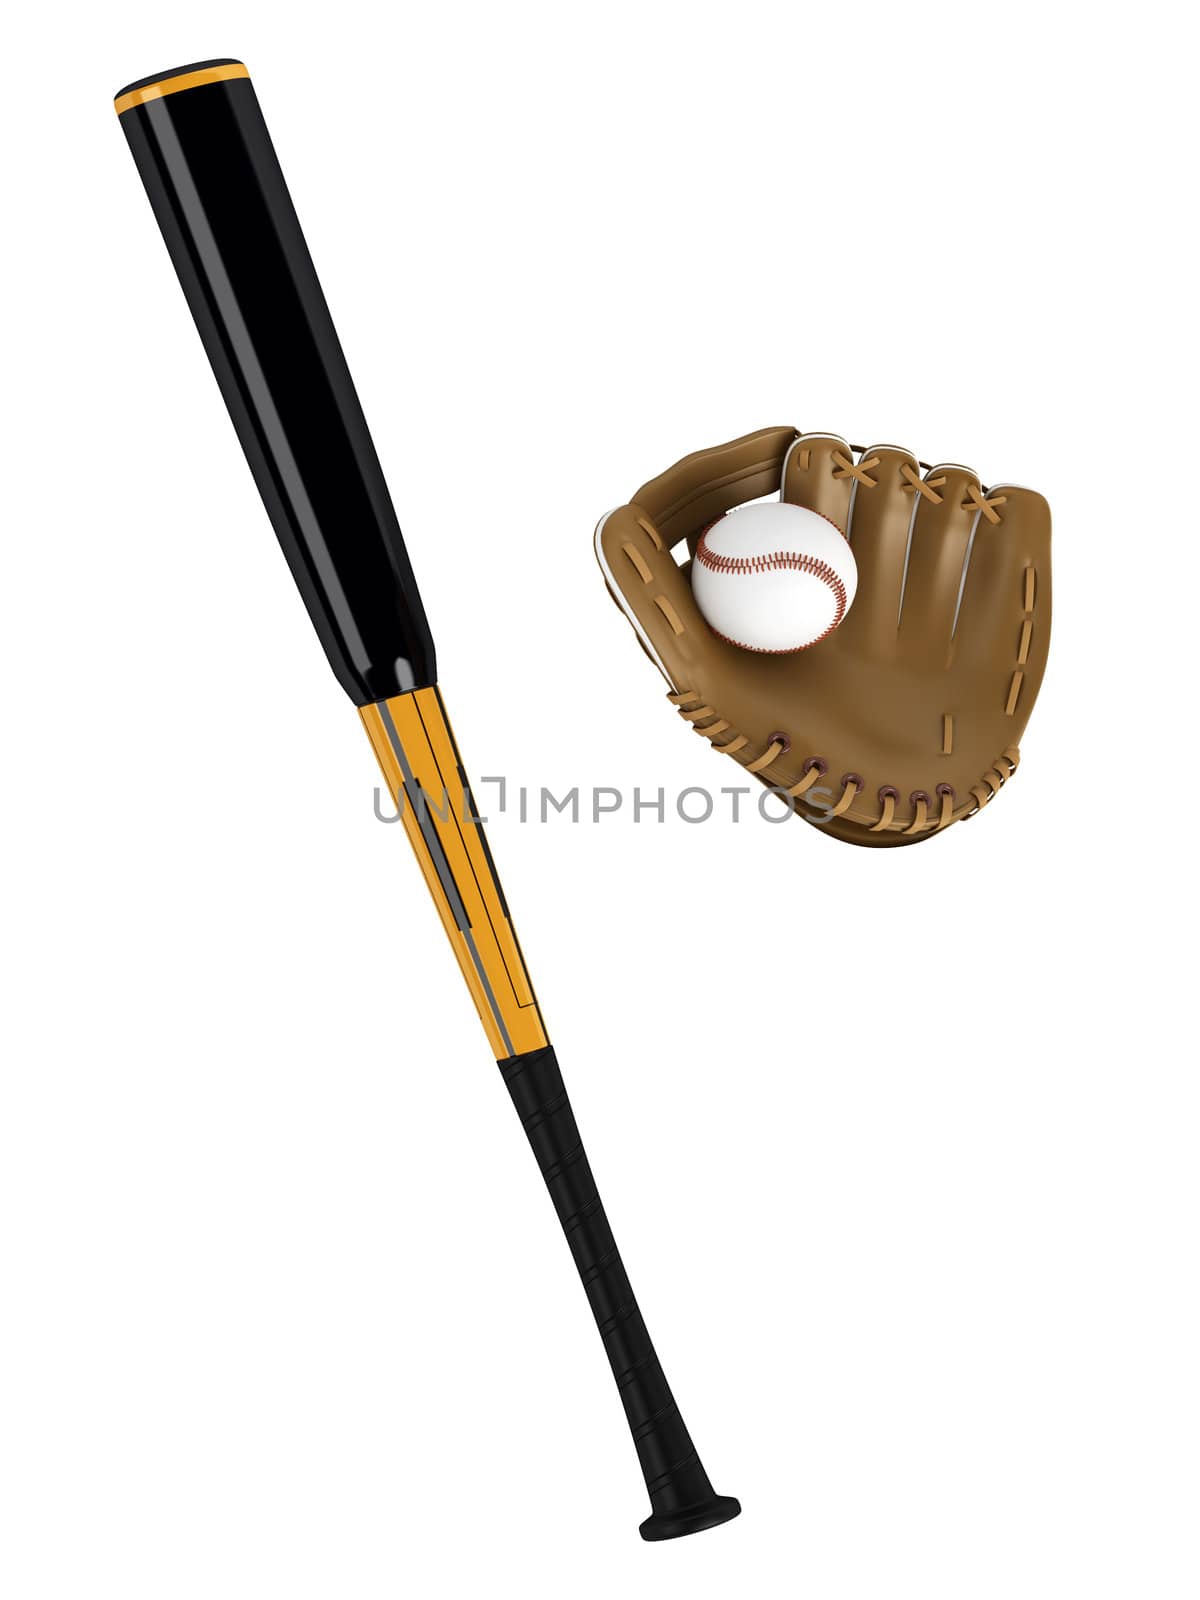 Baseball bat and glove isolated on white background